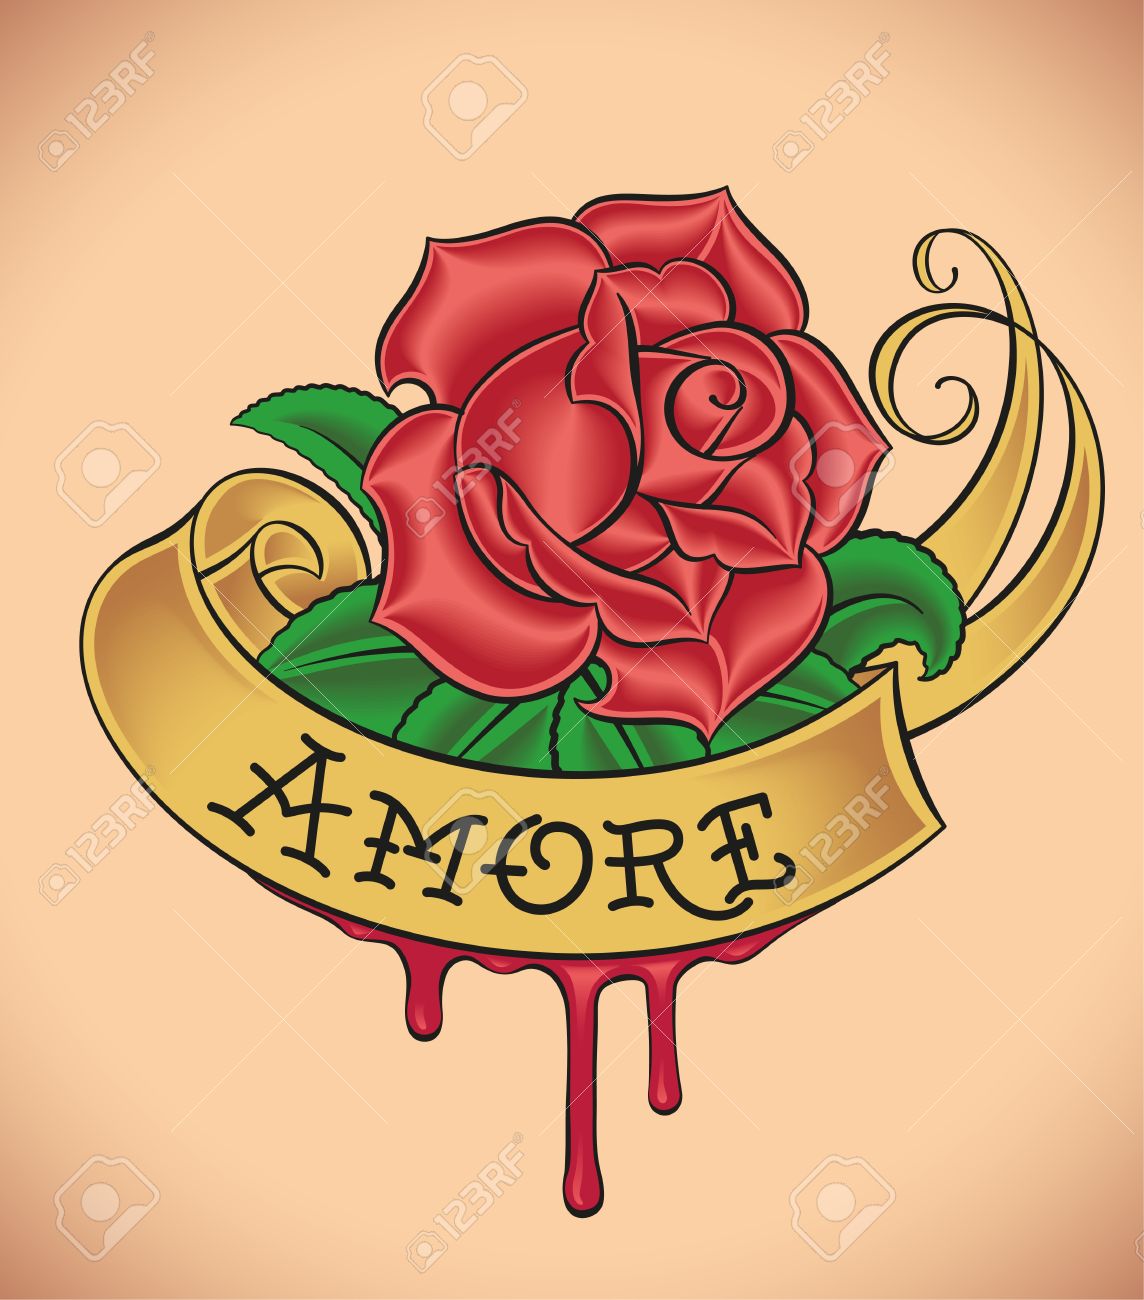 Lovely Rose And Bleeding Banner Old School Tattoo Design